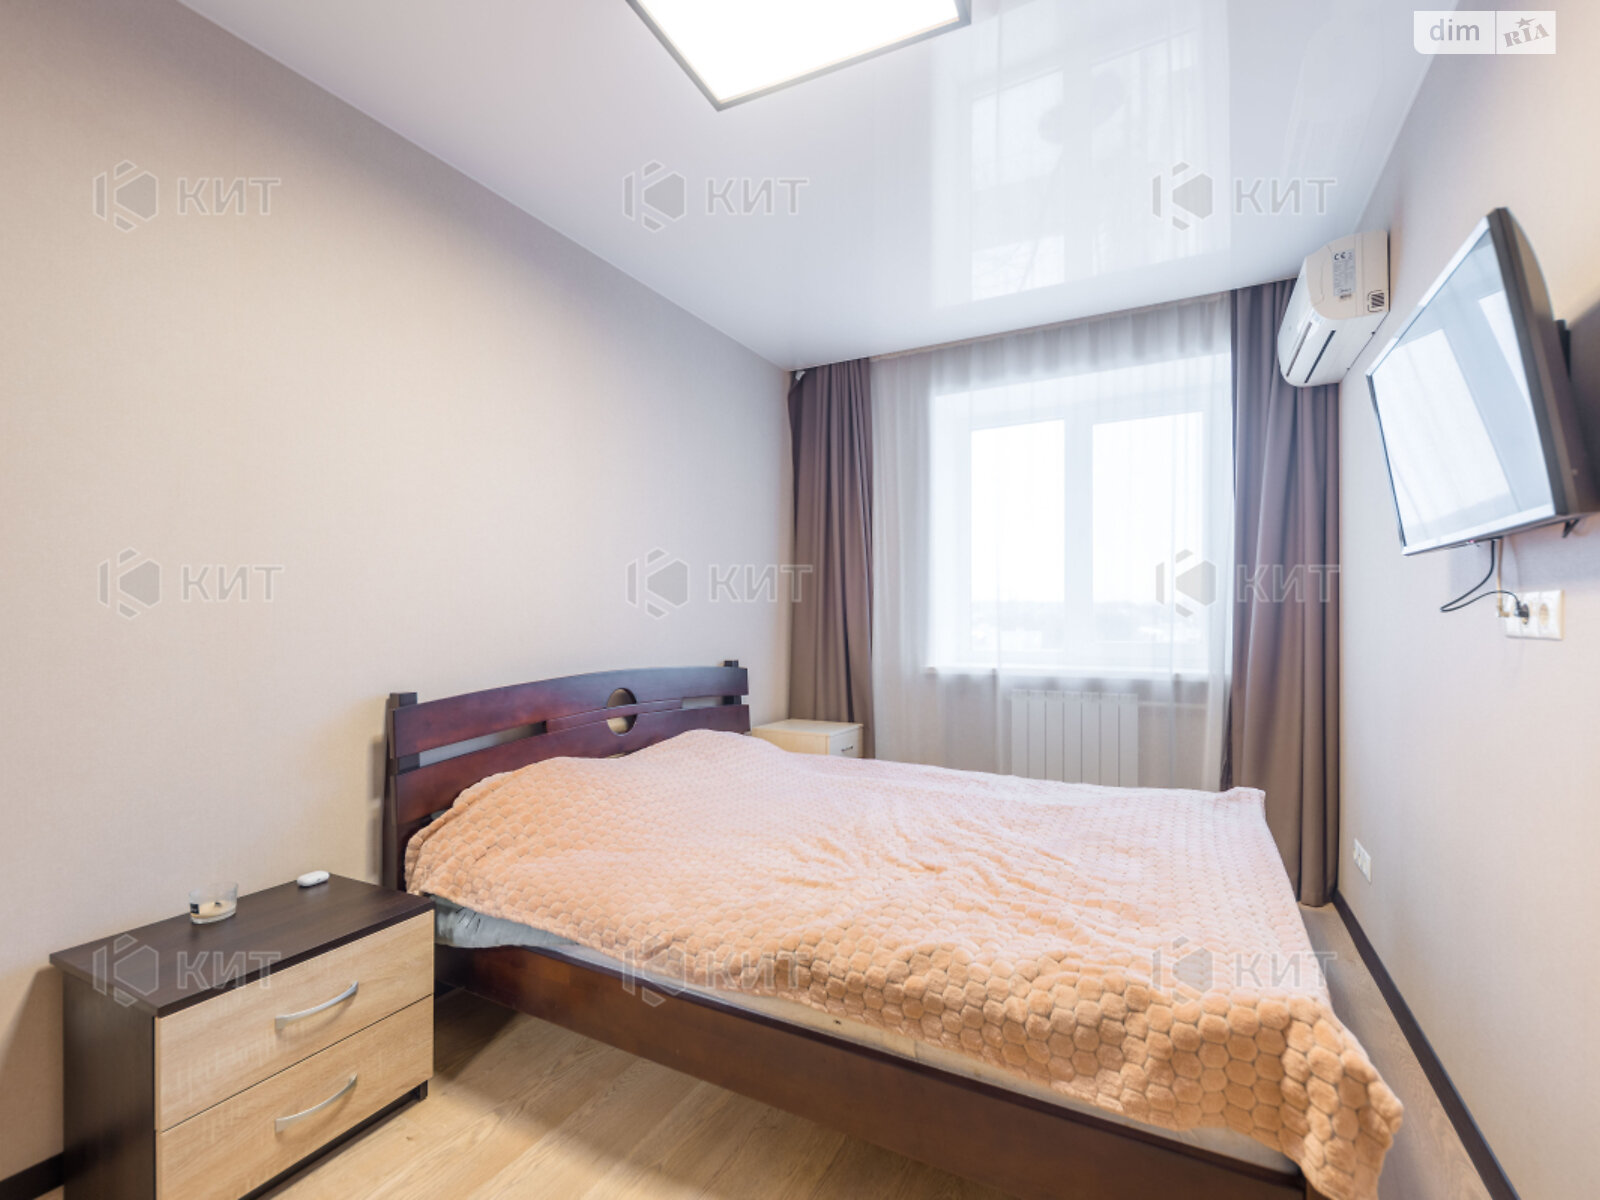 Продаж двокімнатної квартири в Харкові, на просп. Науки 64, район Павлове Поле фото 1